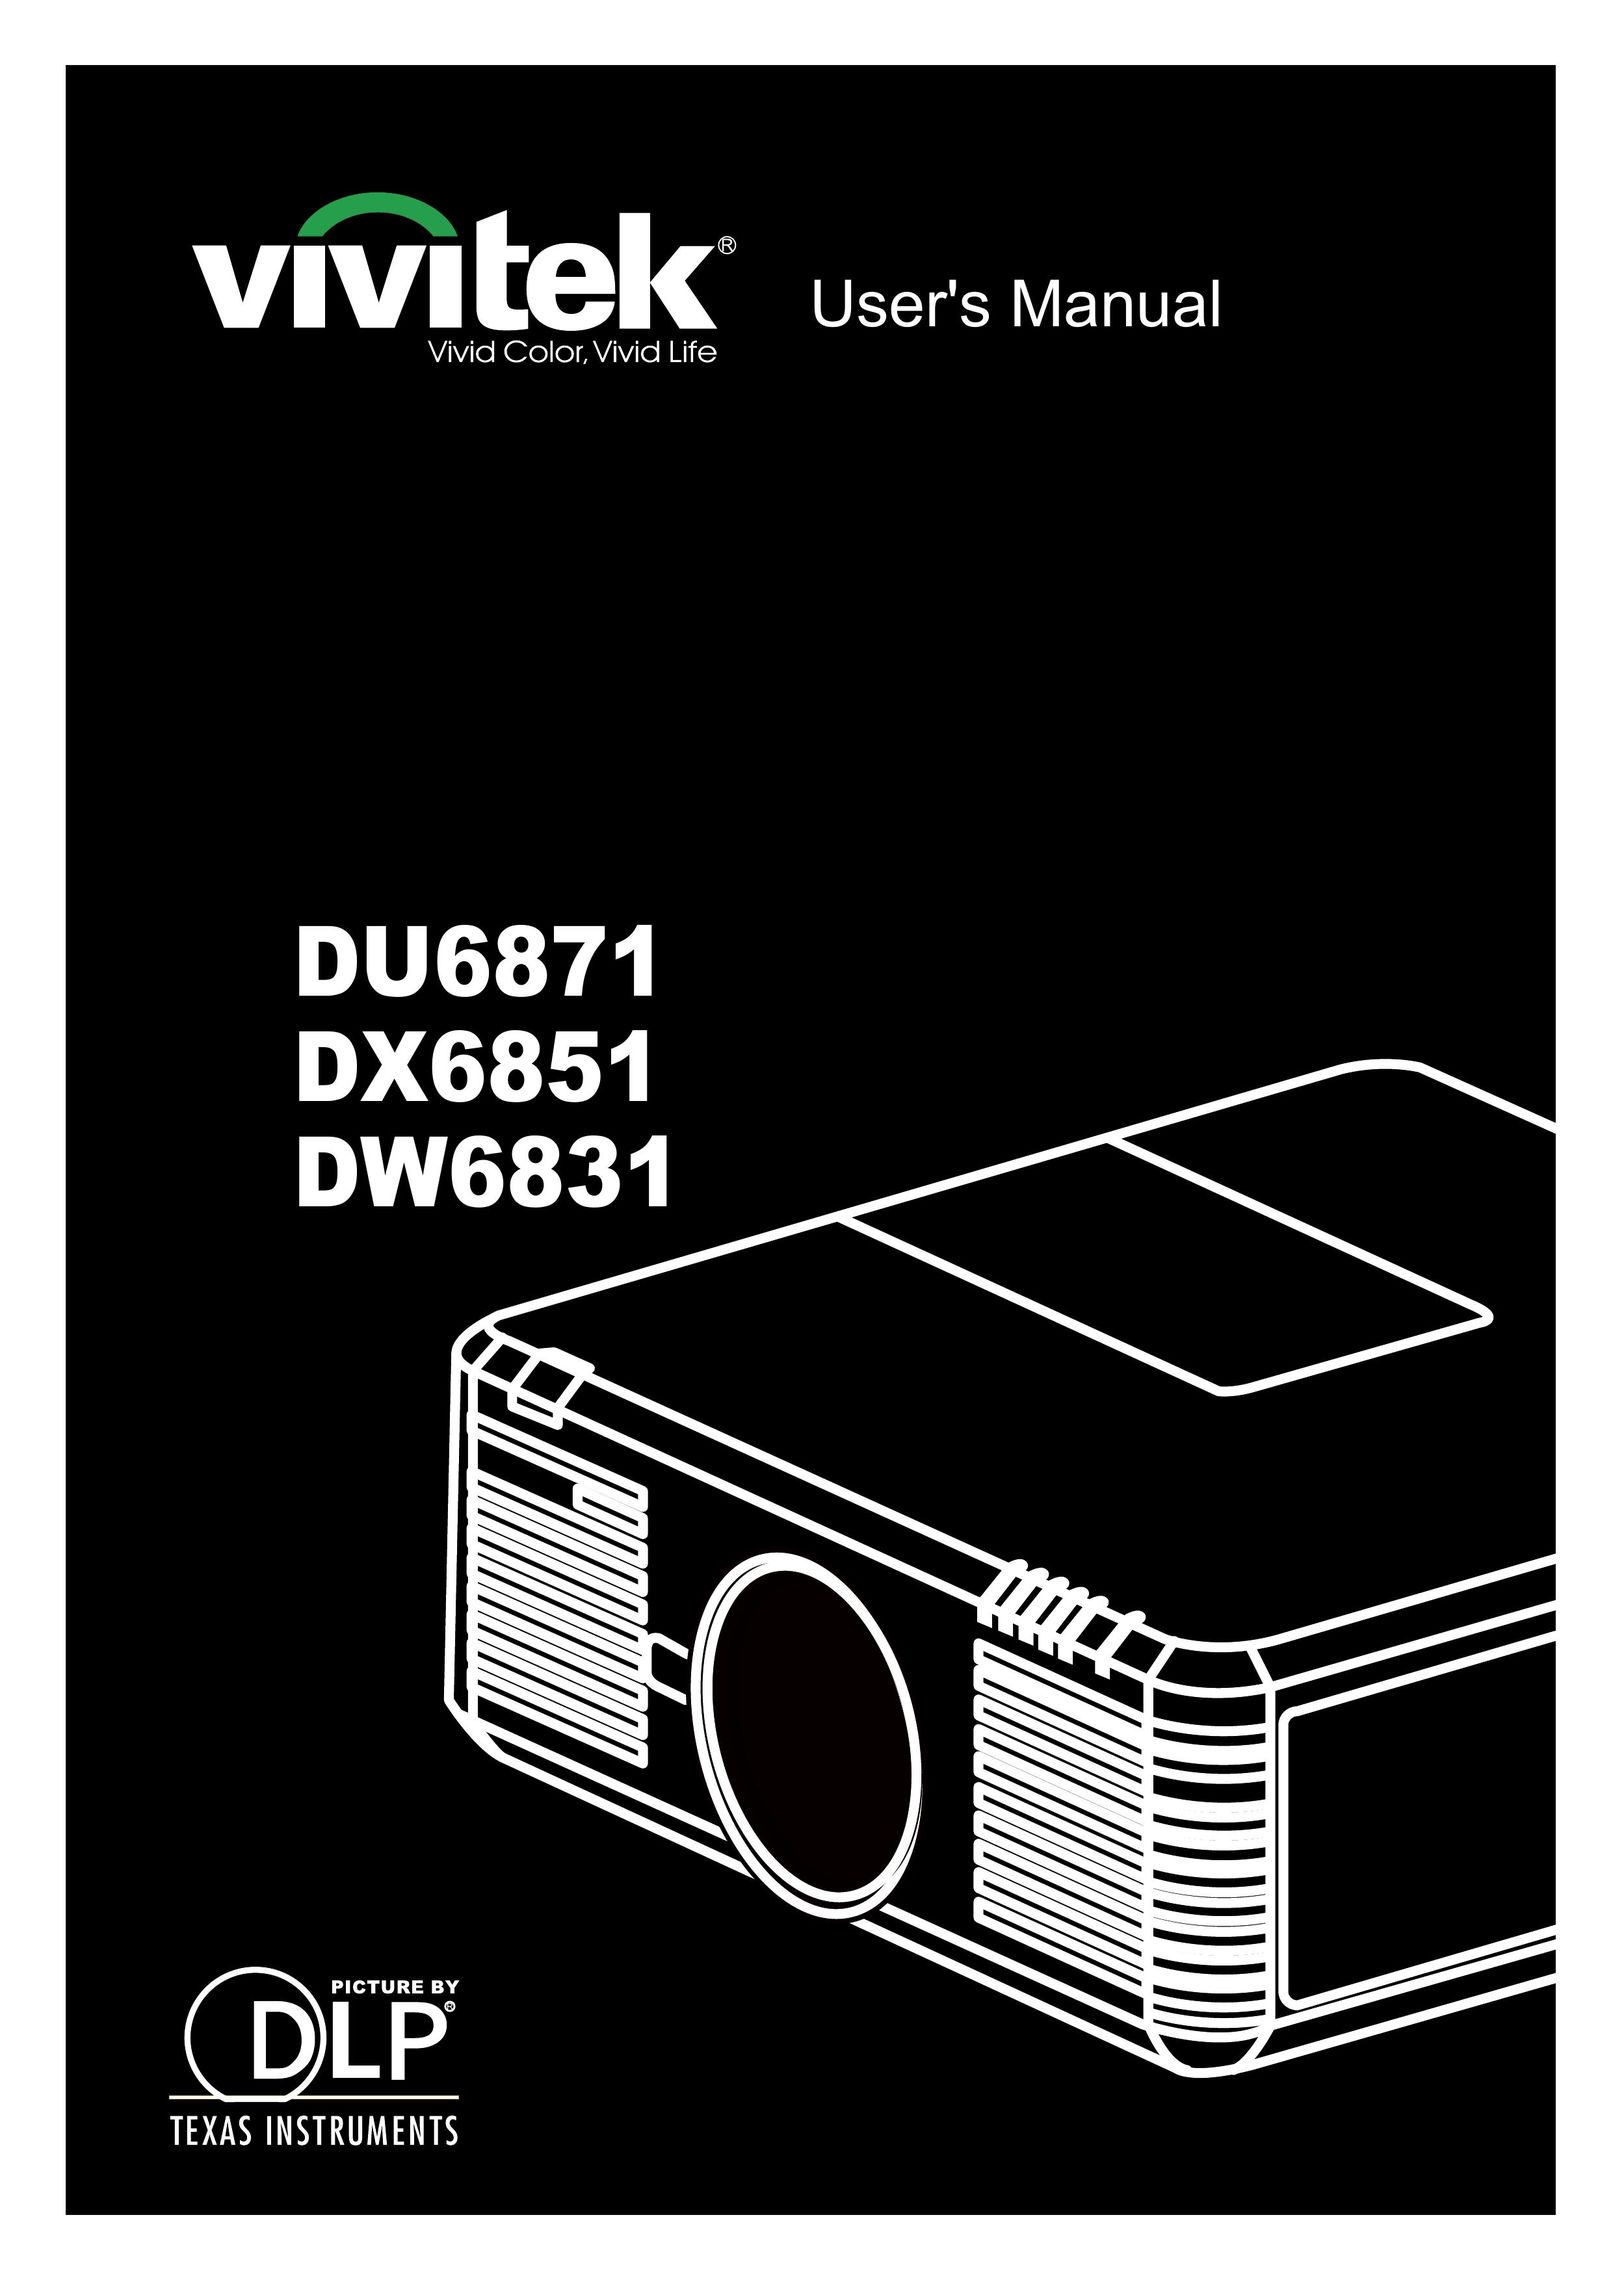 Vivitek dw6831 Projection Television User Manual